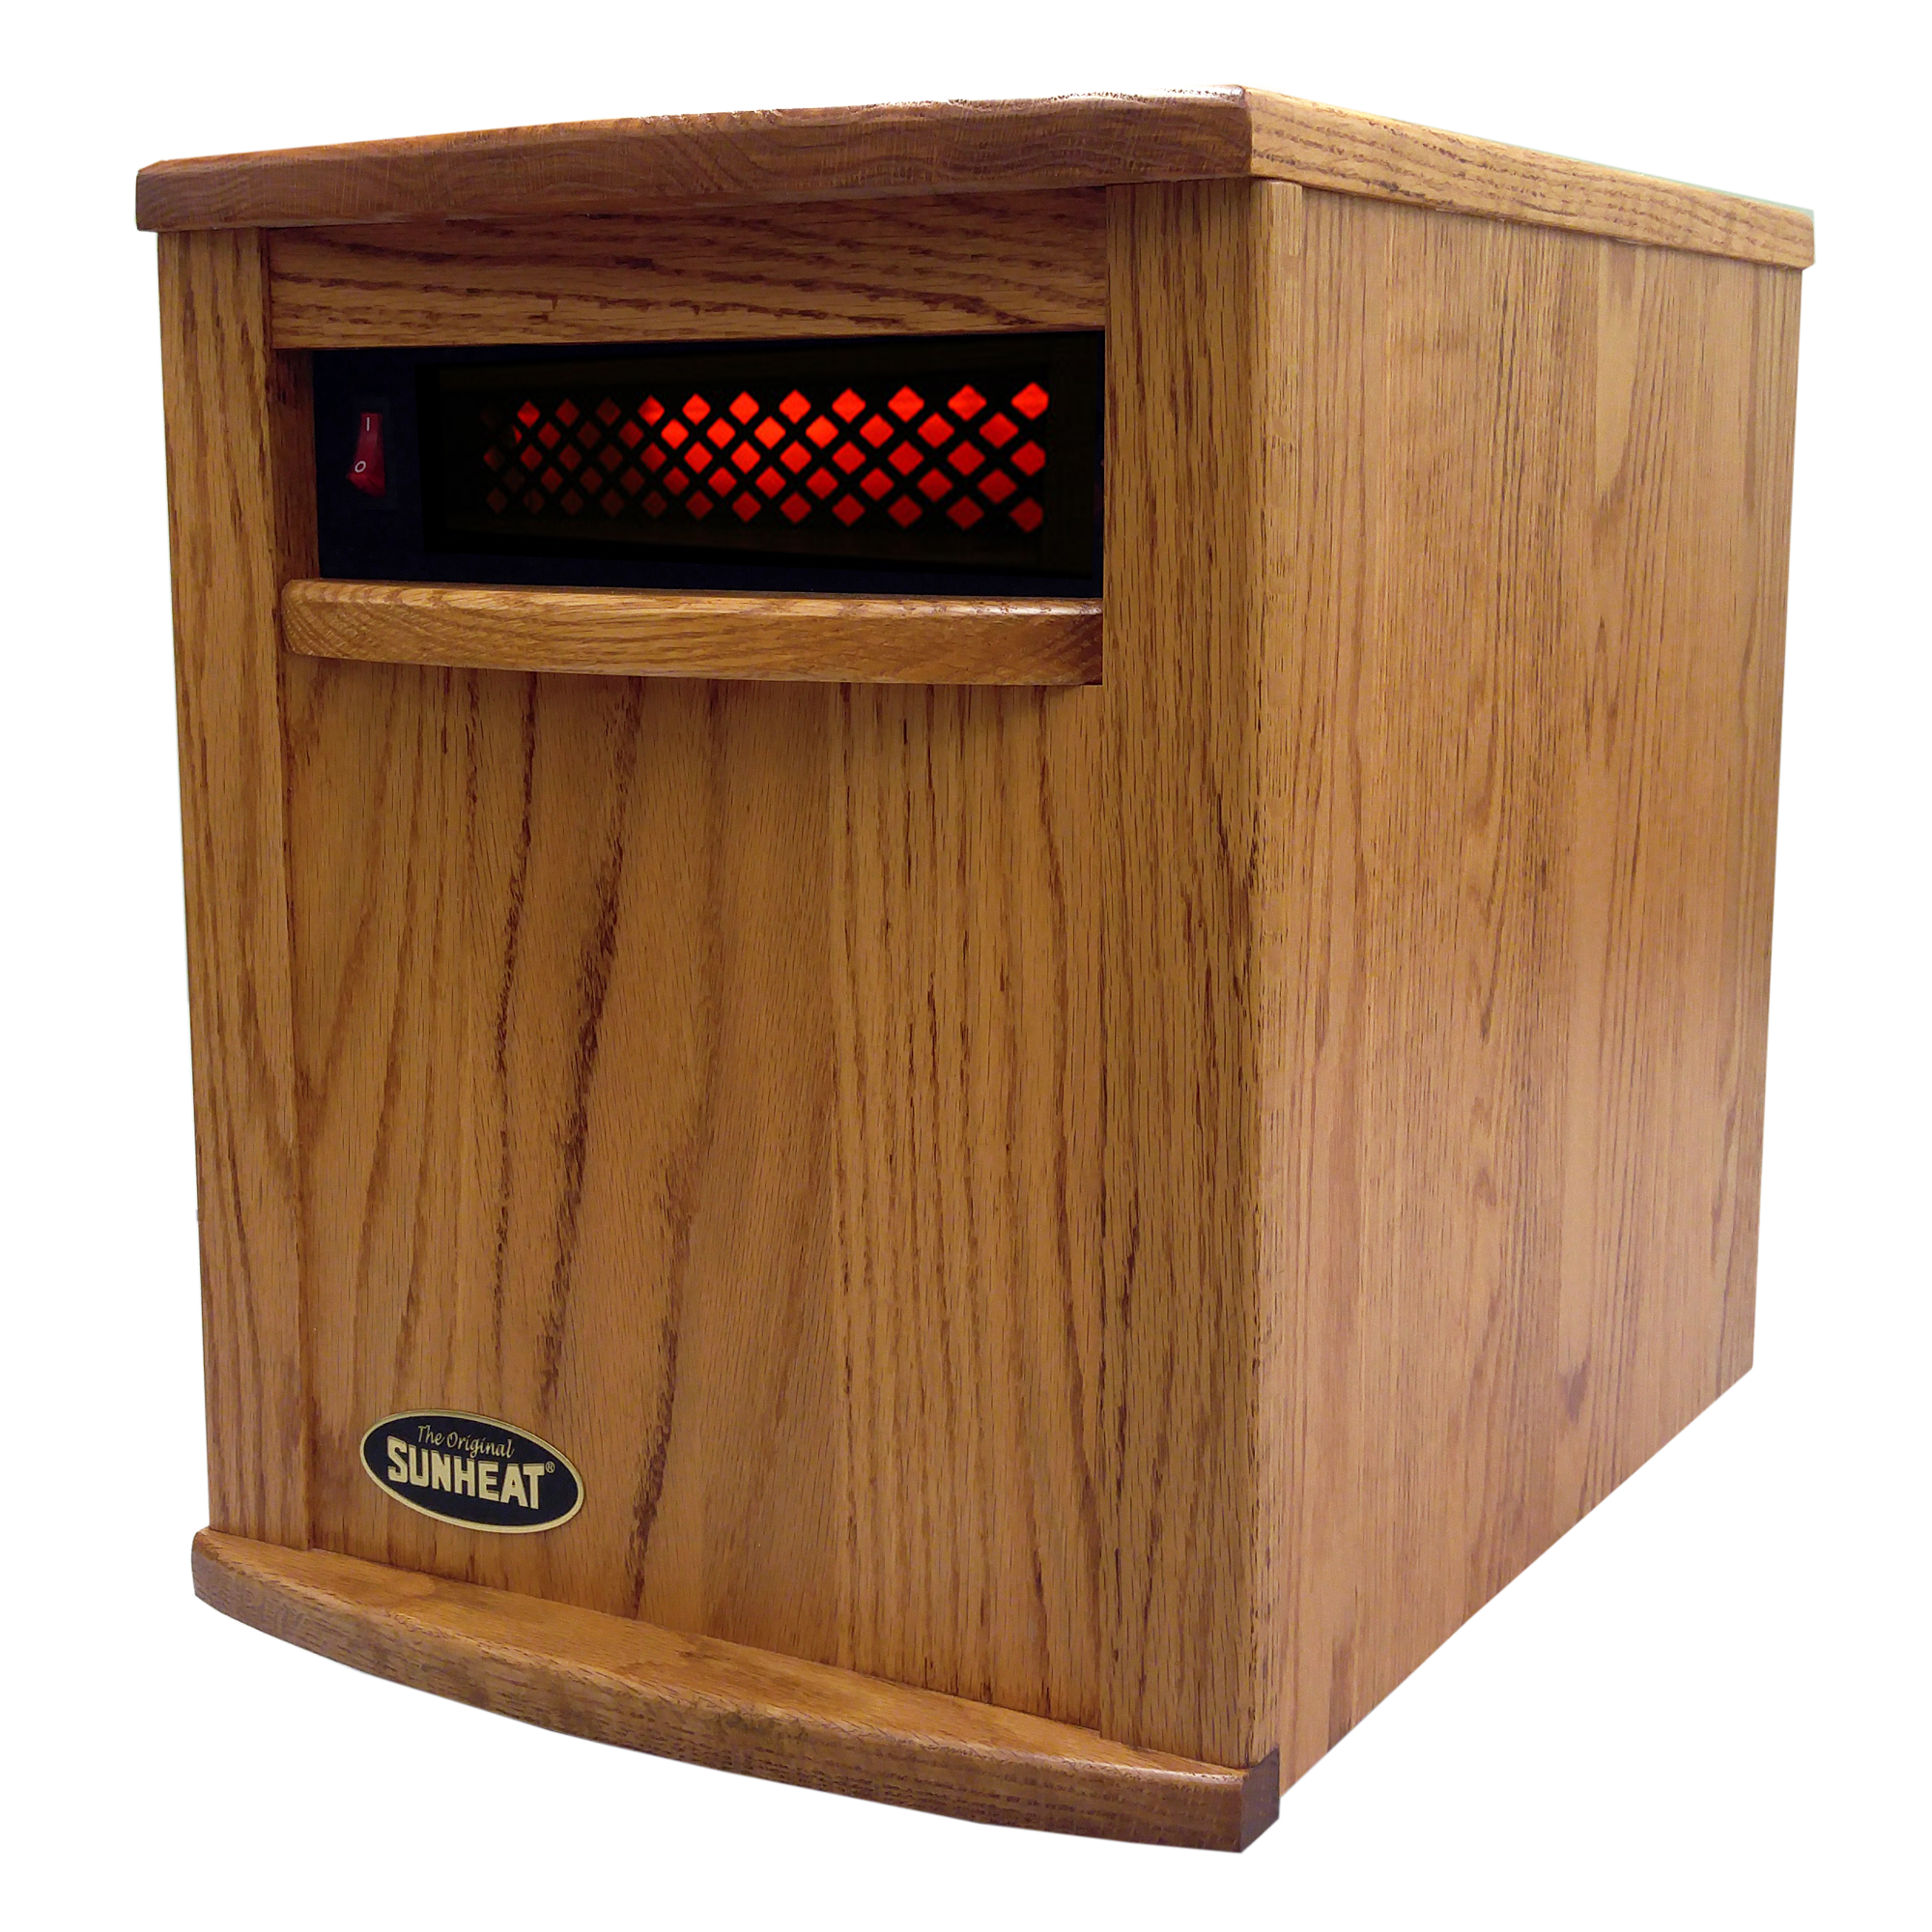 Original SUNHEAT Infrared Heater - Nebraska Oak -USA Made